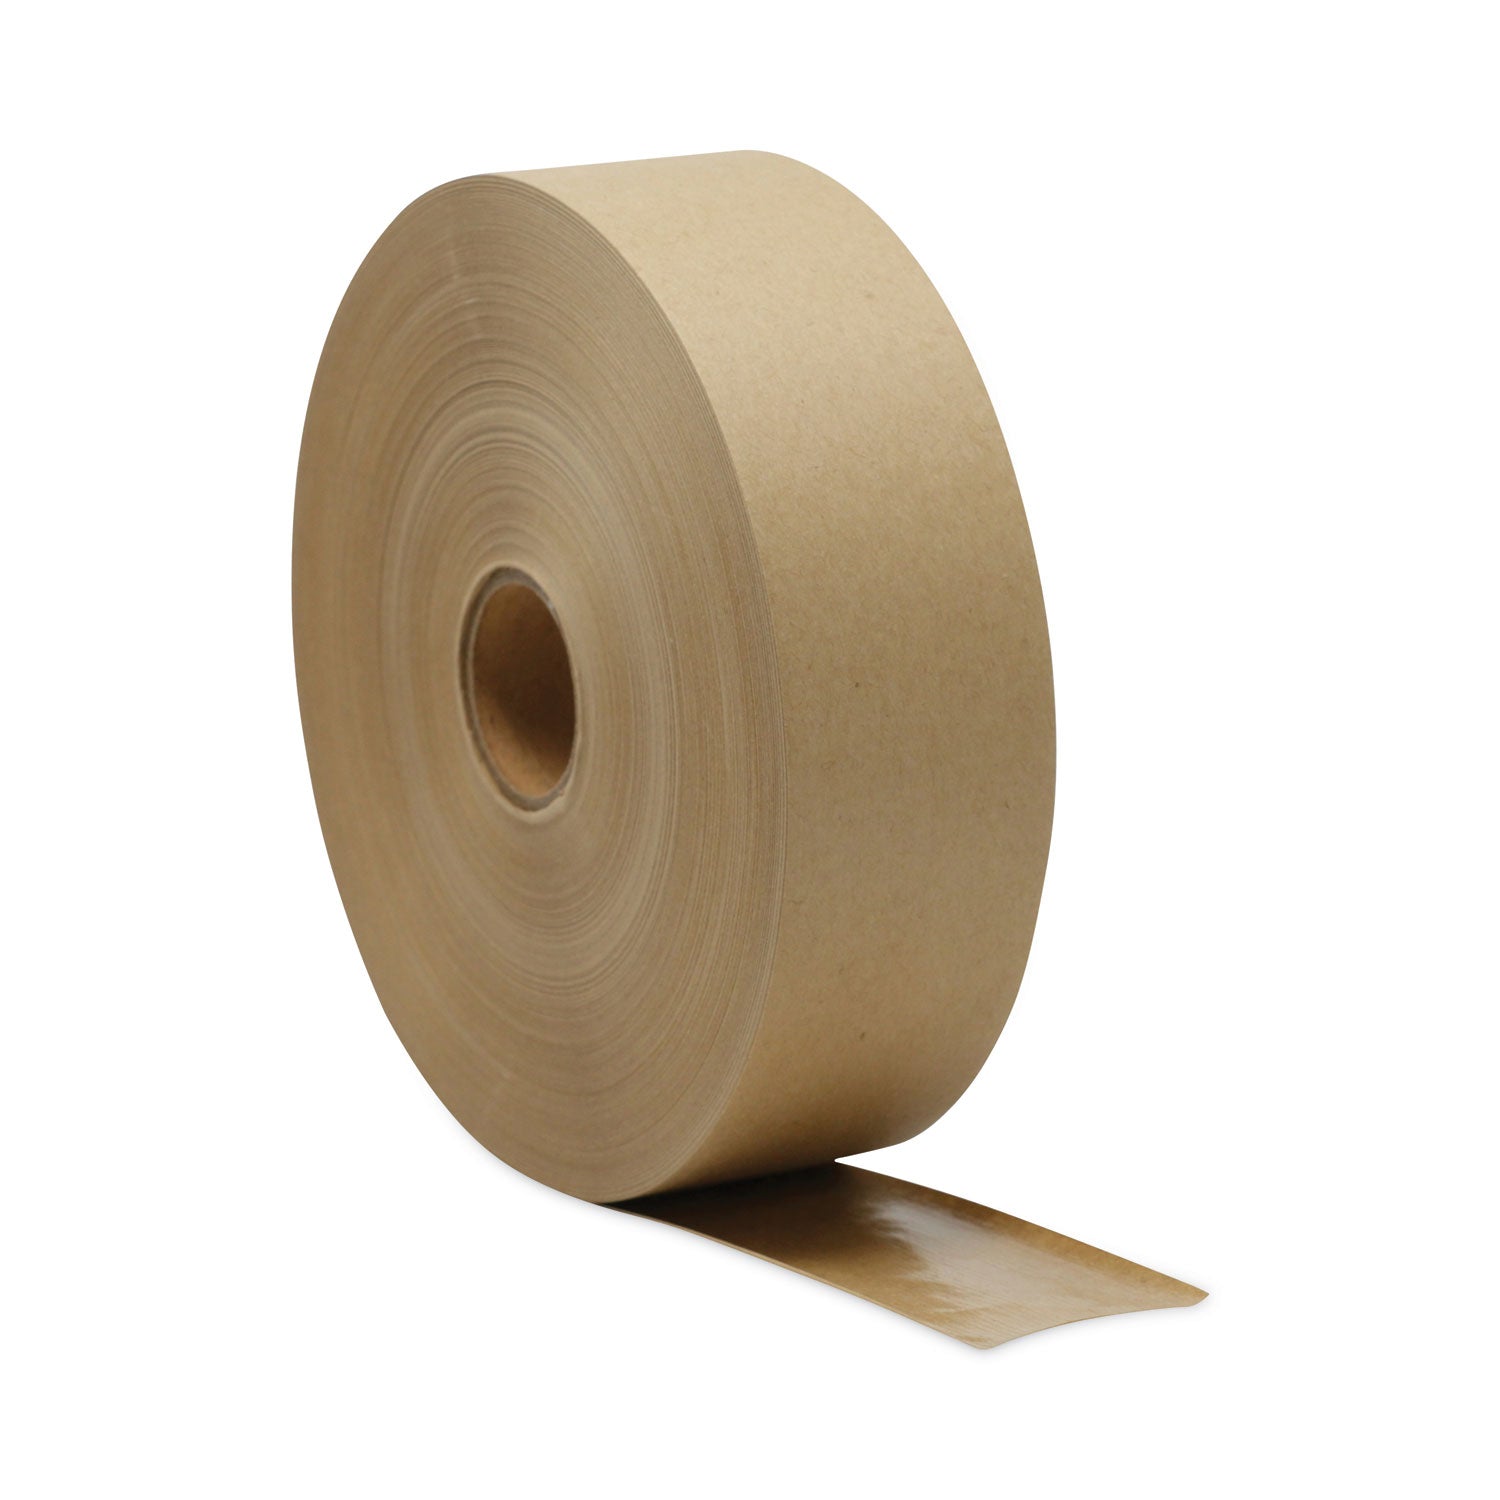 gummed-kraft-sealing-tape-3-core-2-x-600-ft-brown-12-carton_unv2163 - 2